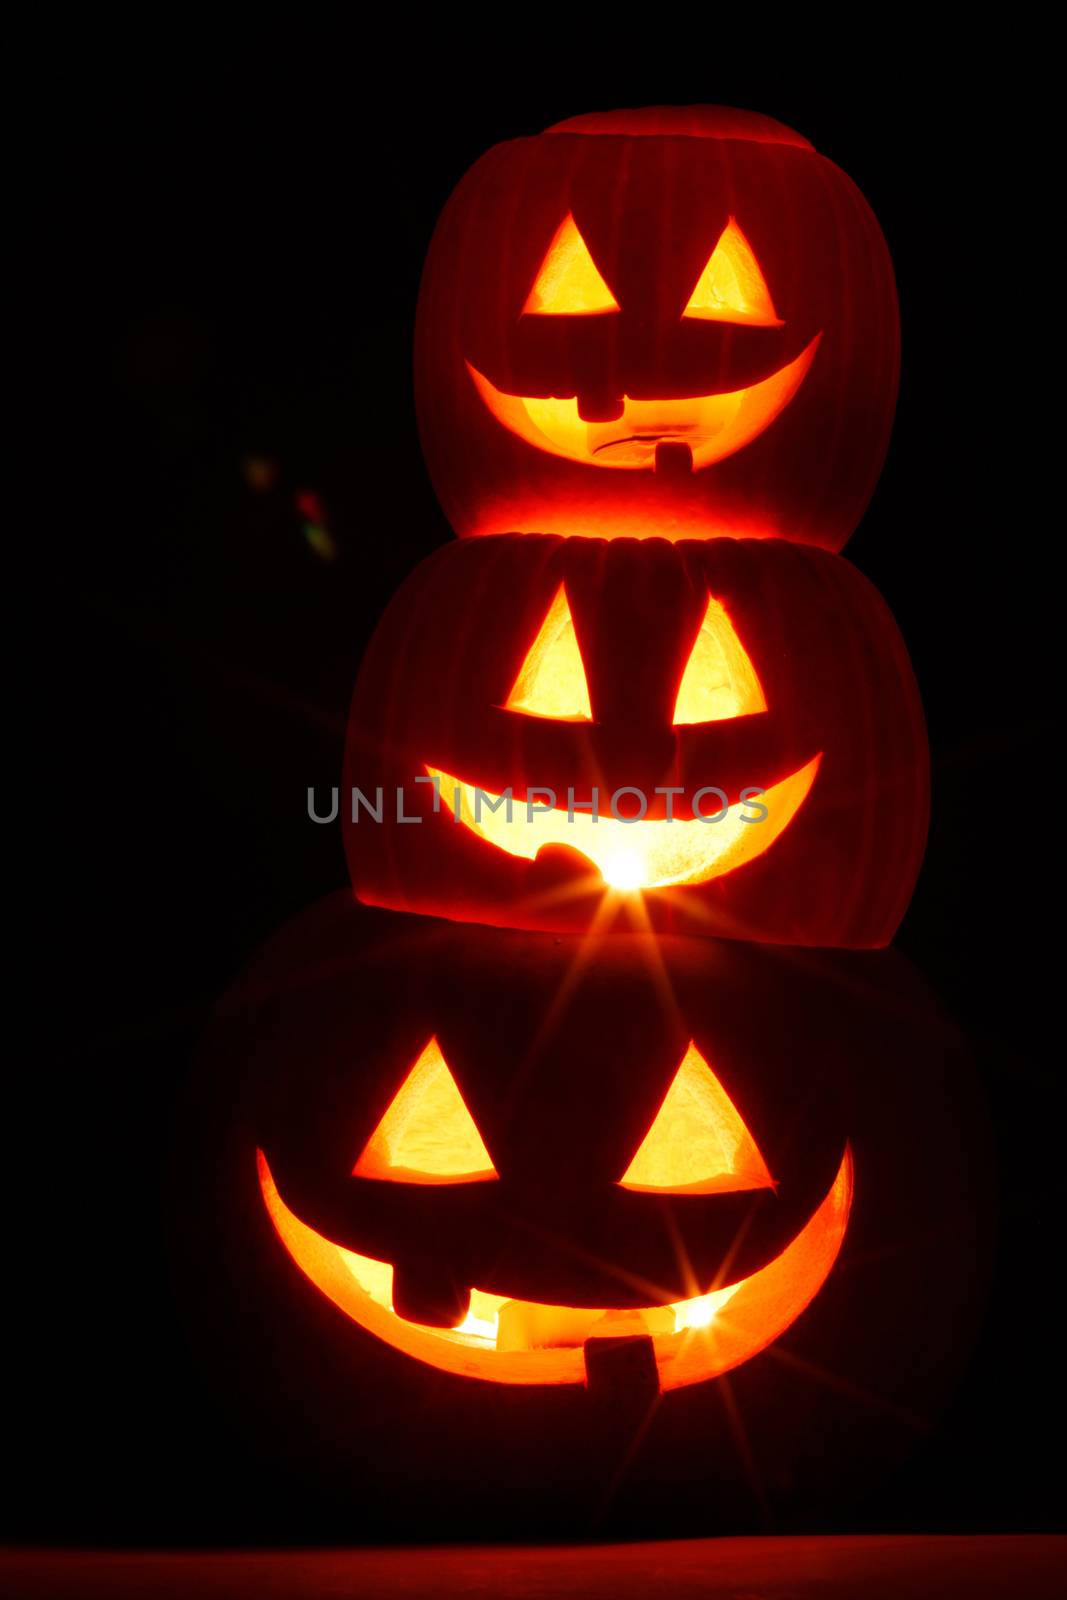 Halloween Pumpkins in darkness by Yellowj